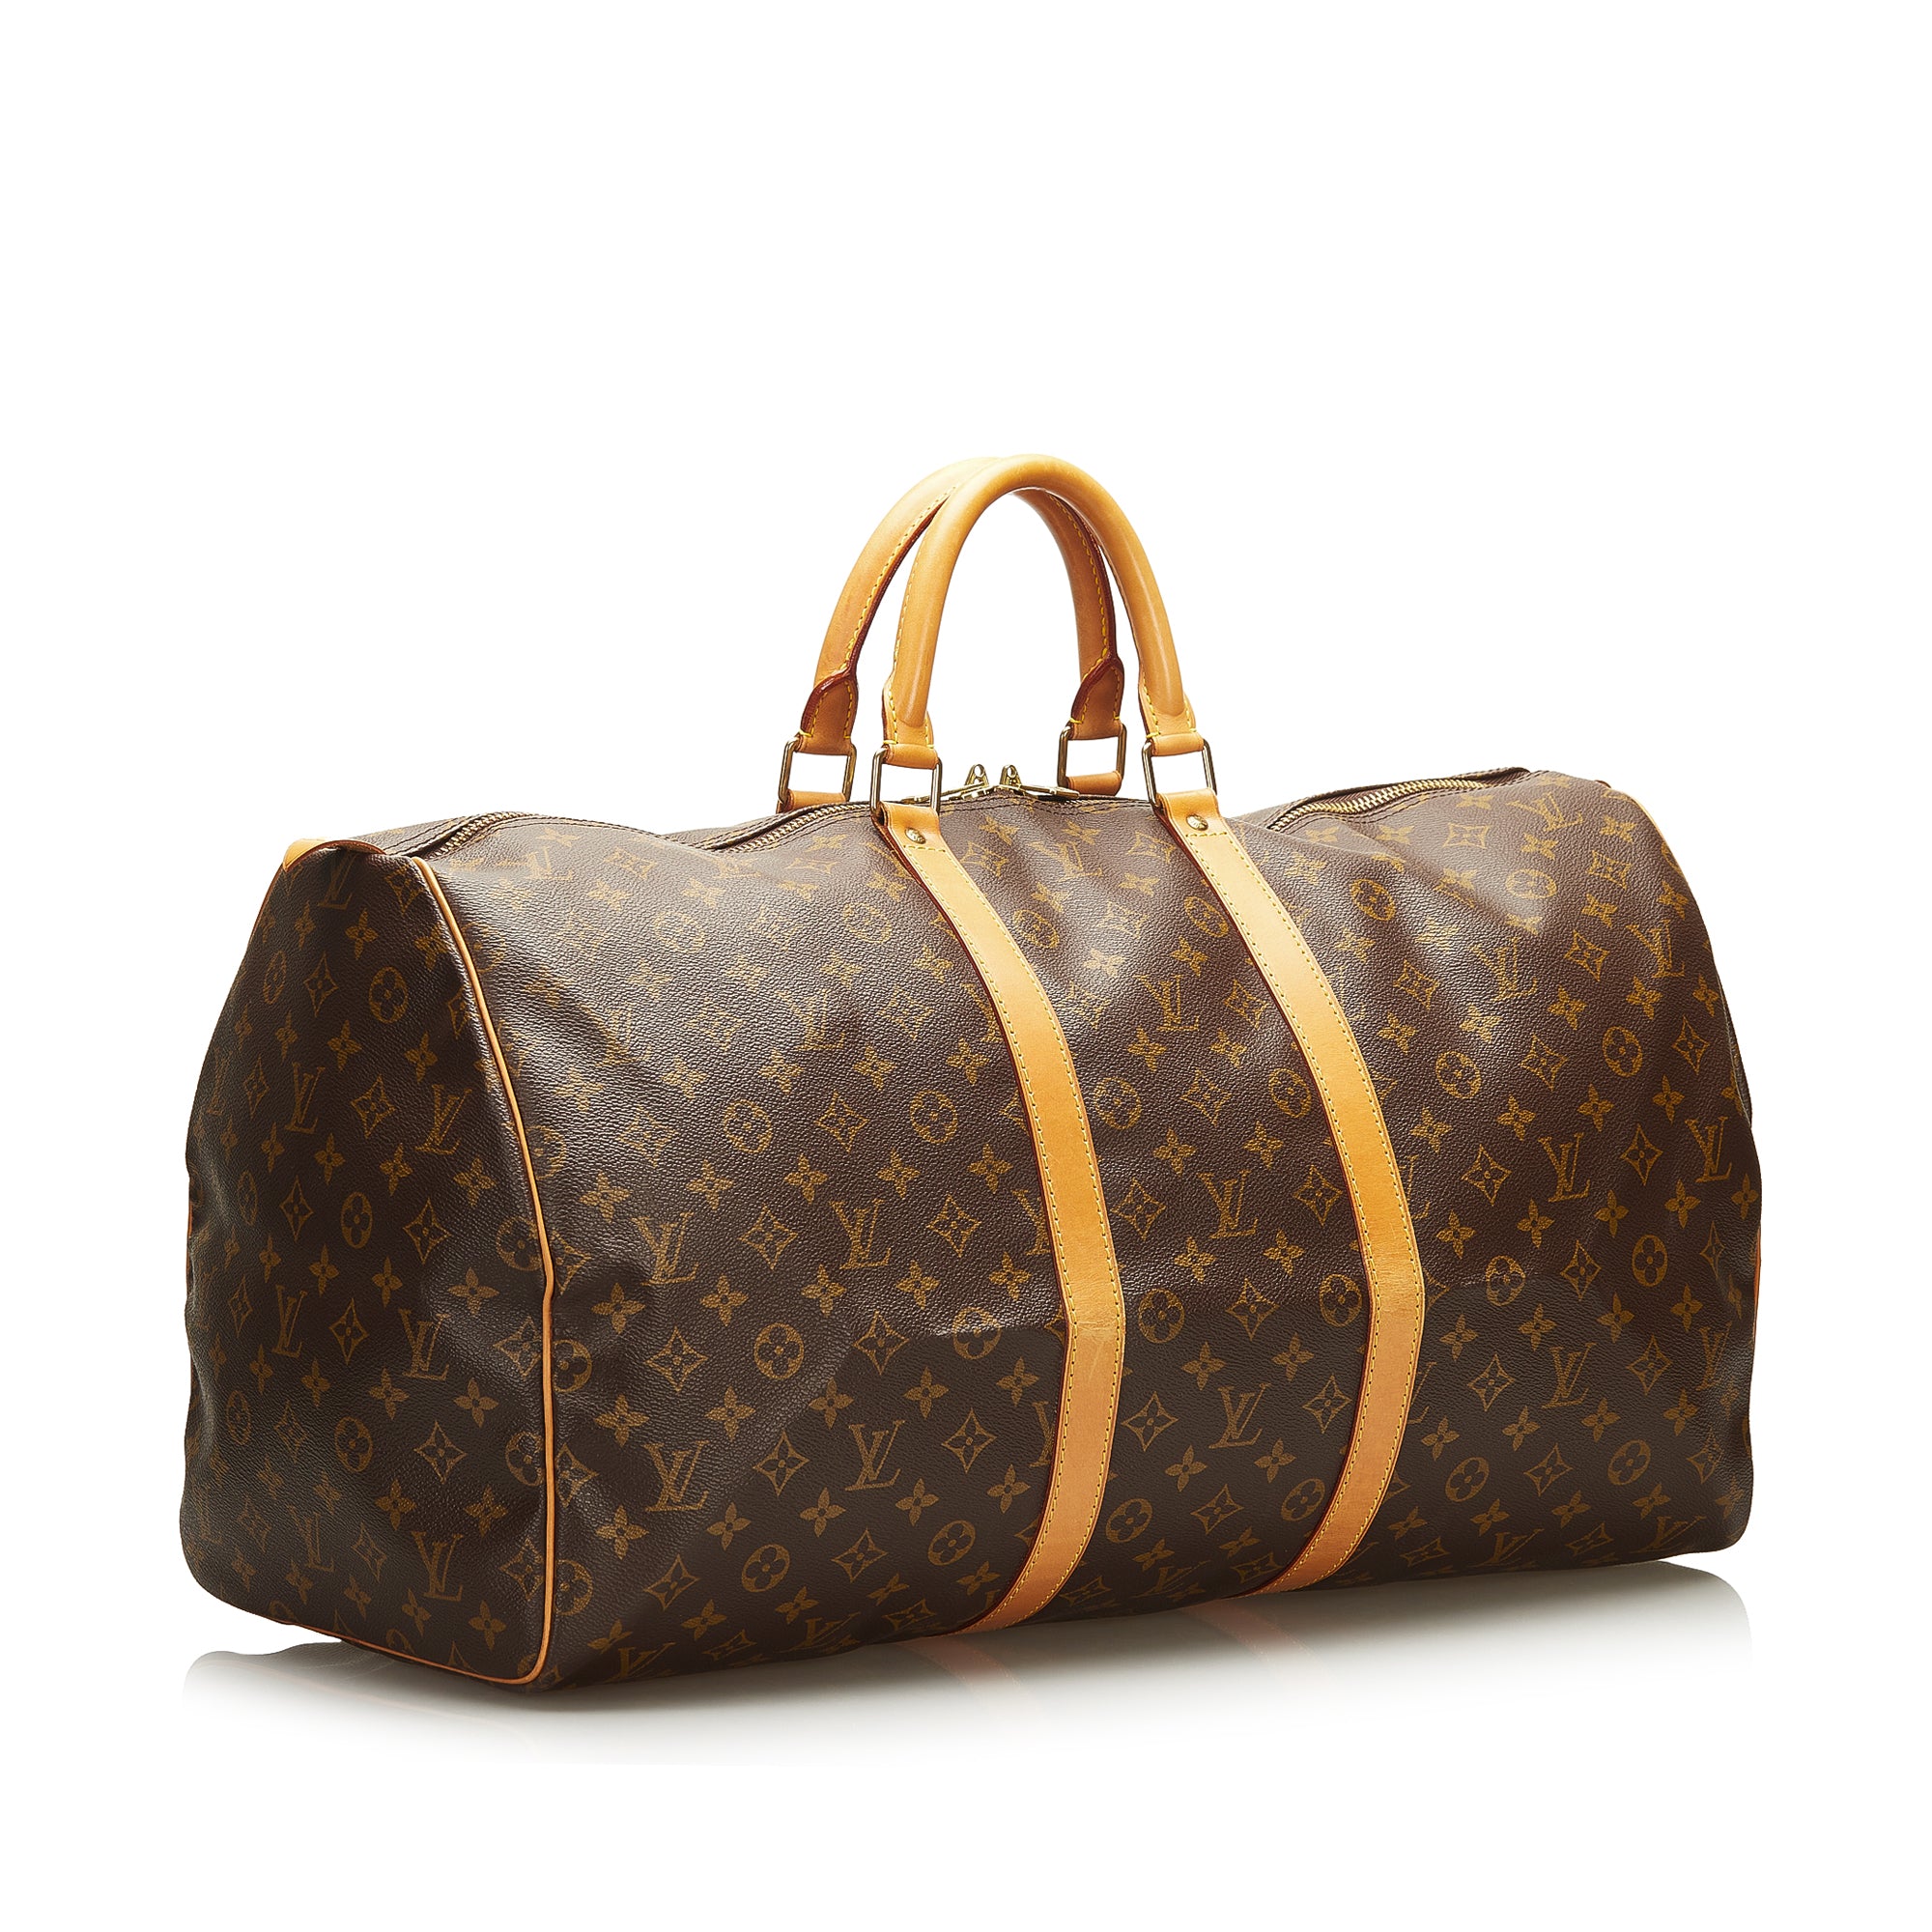 PRELOVED Louis Vuitton Keepall 55 Monogram Duffel Bag VI0973 040623